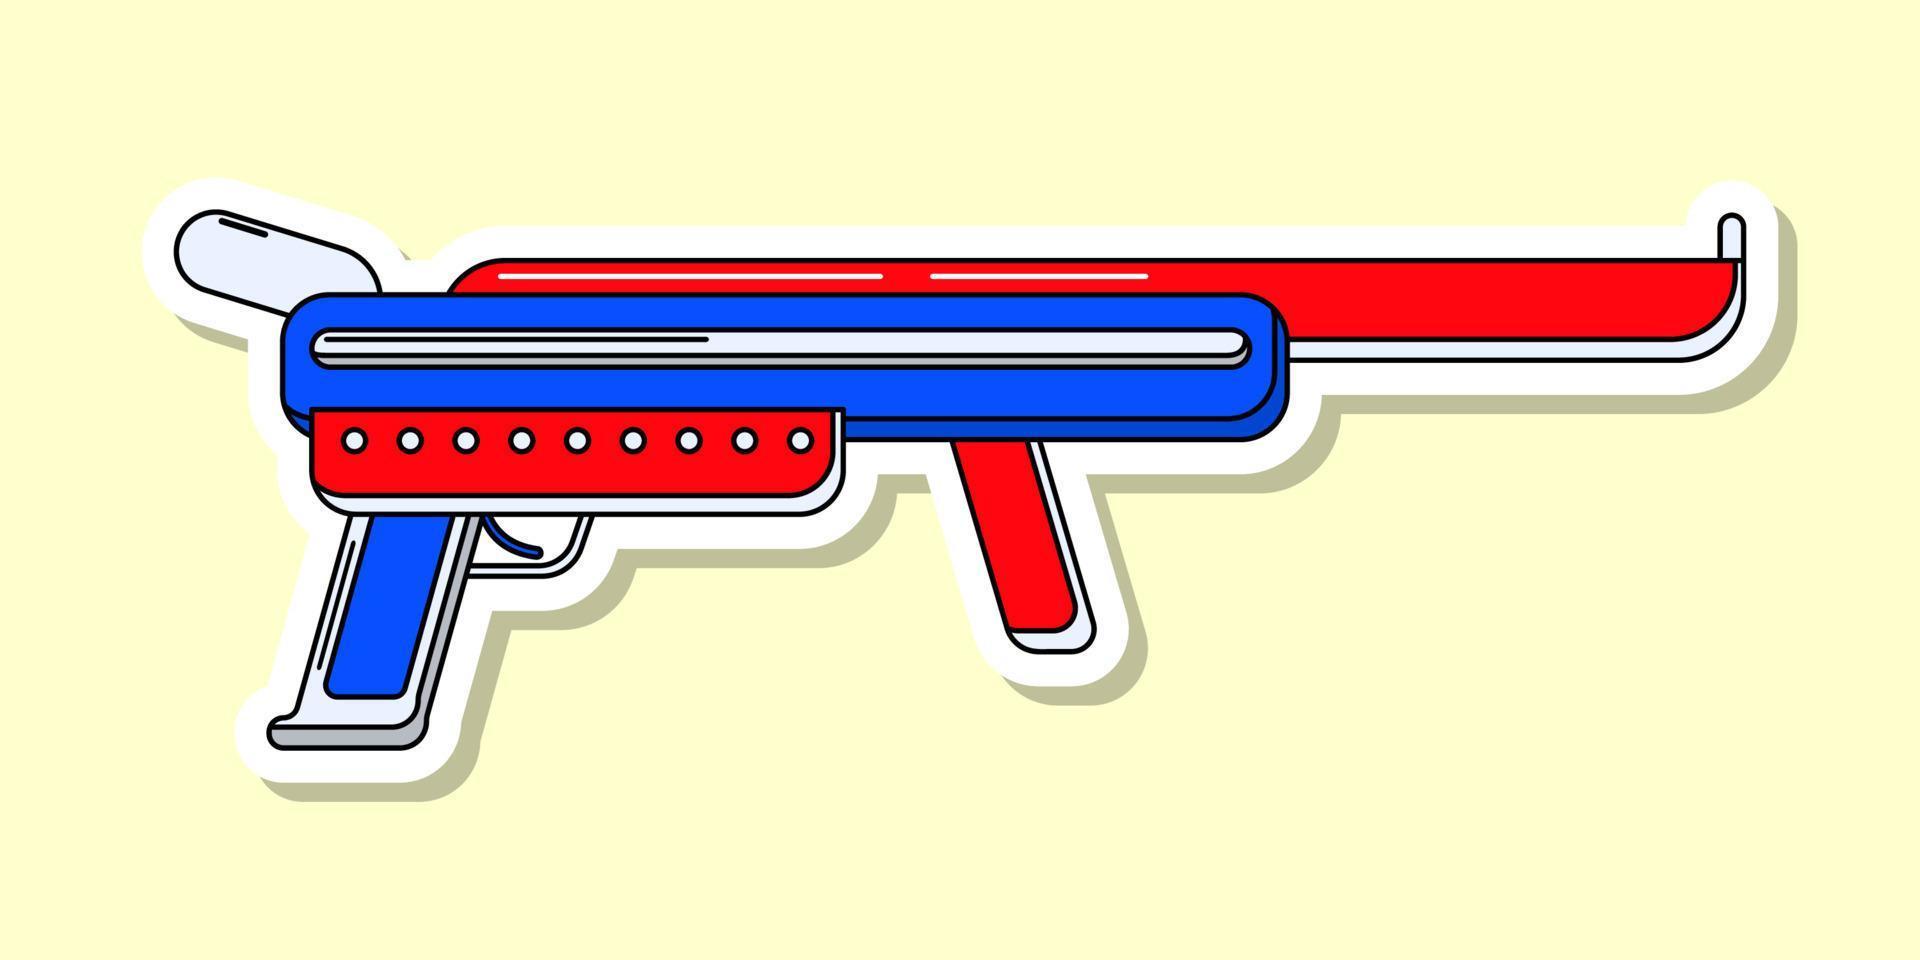 adesivo de blaster de desenho vetorial. arma de brinquedo colorida isolada com contorno branco. design de arma futurista vetor